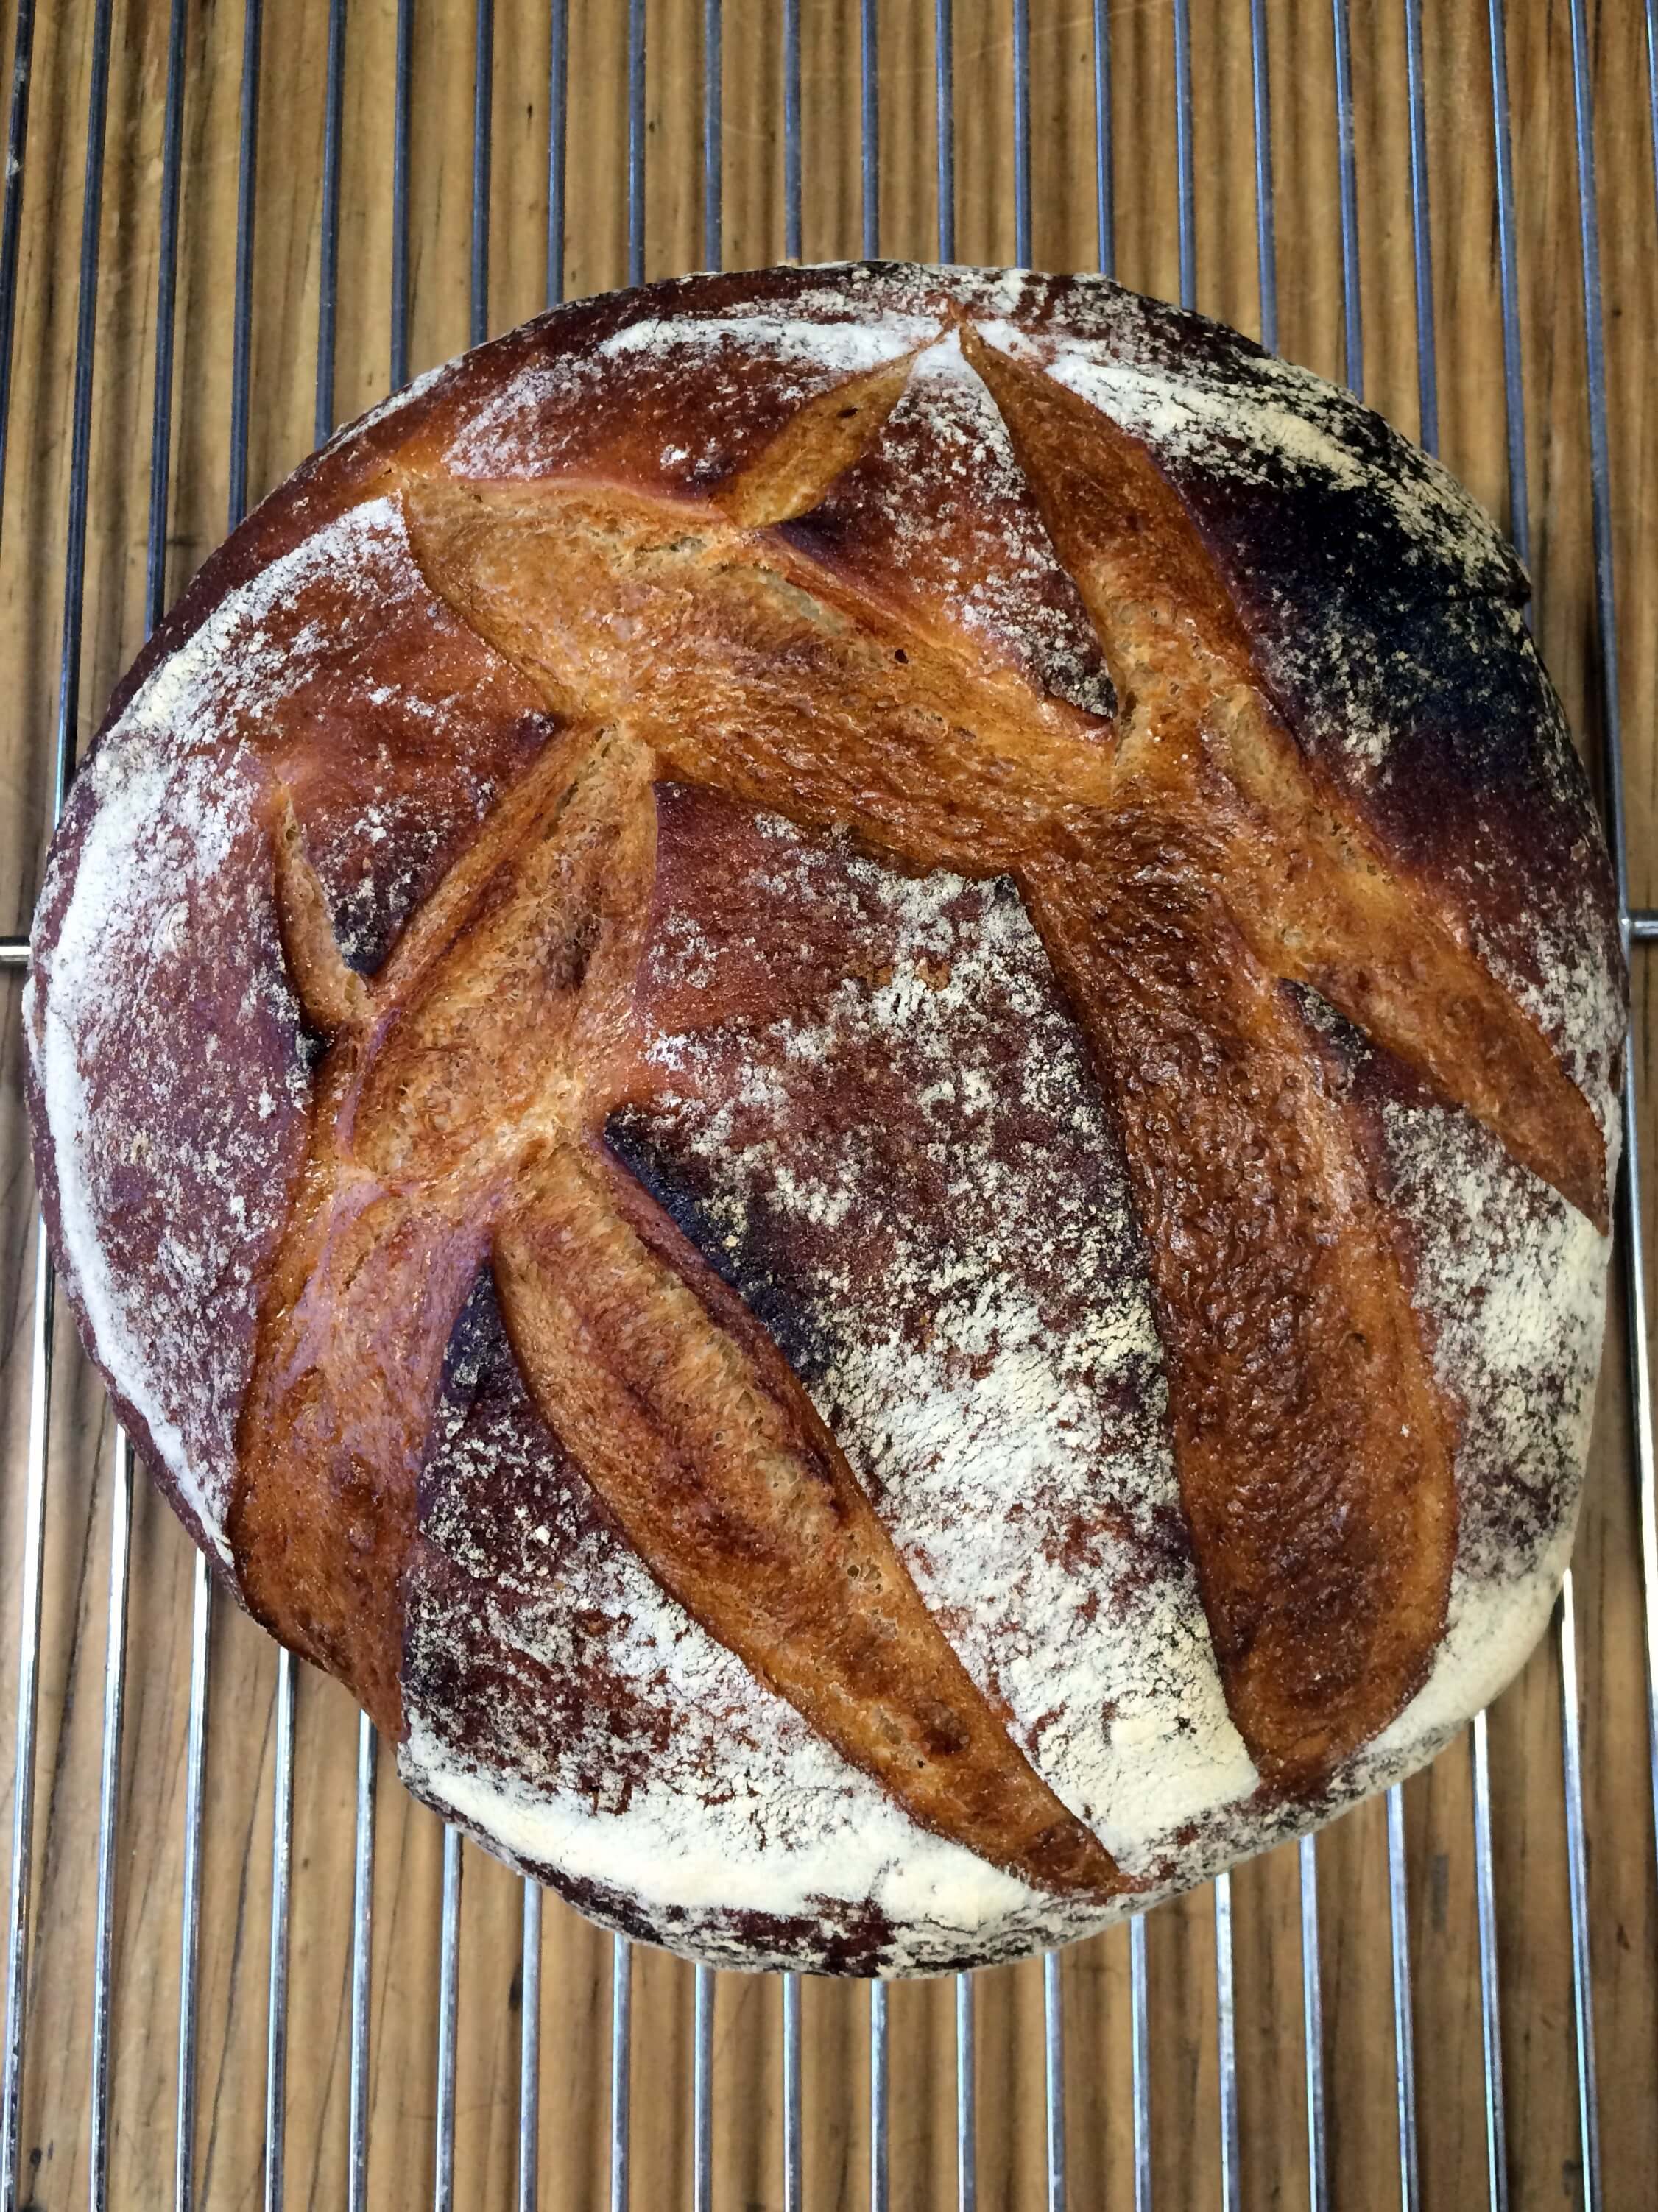 https://priscillamartel.com/wp-content/uploads/2016/10/Loaf-burnished-and-golden-from-steam-in-the-oven.jpg